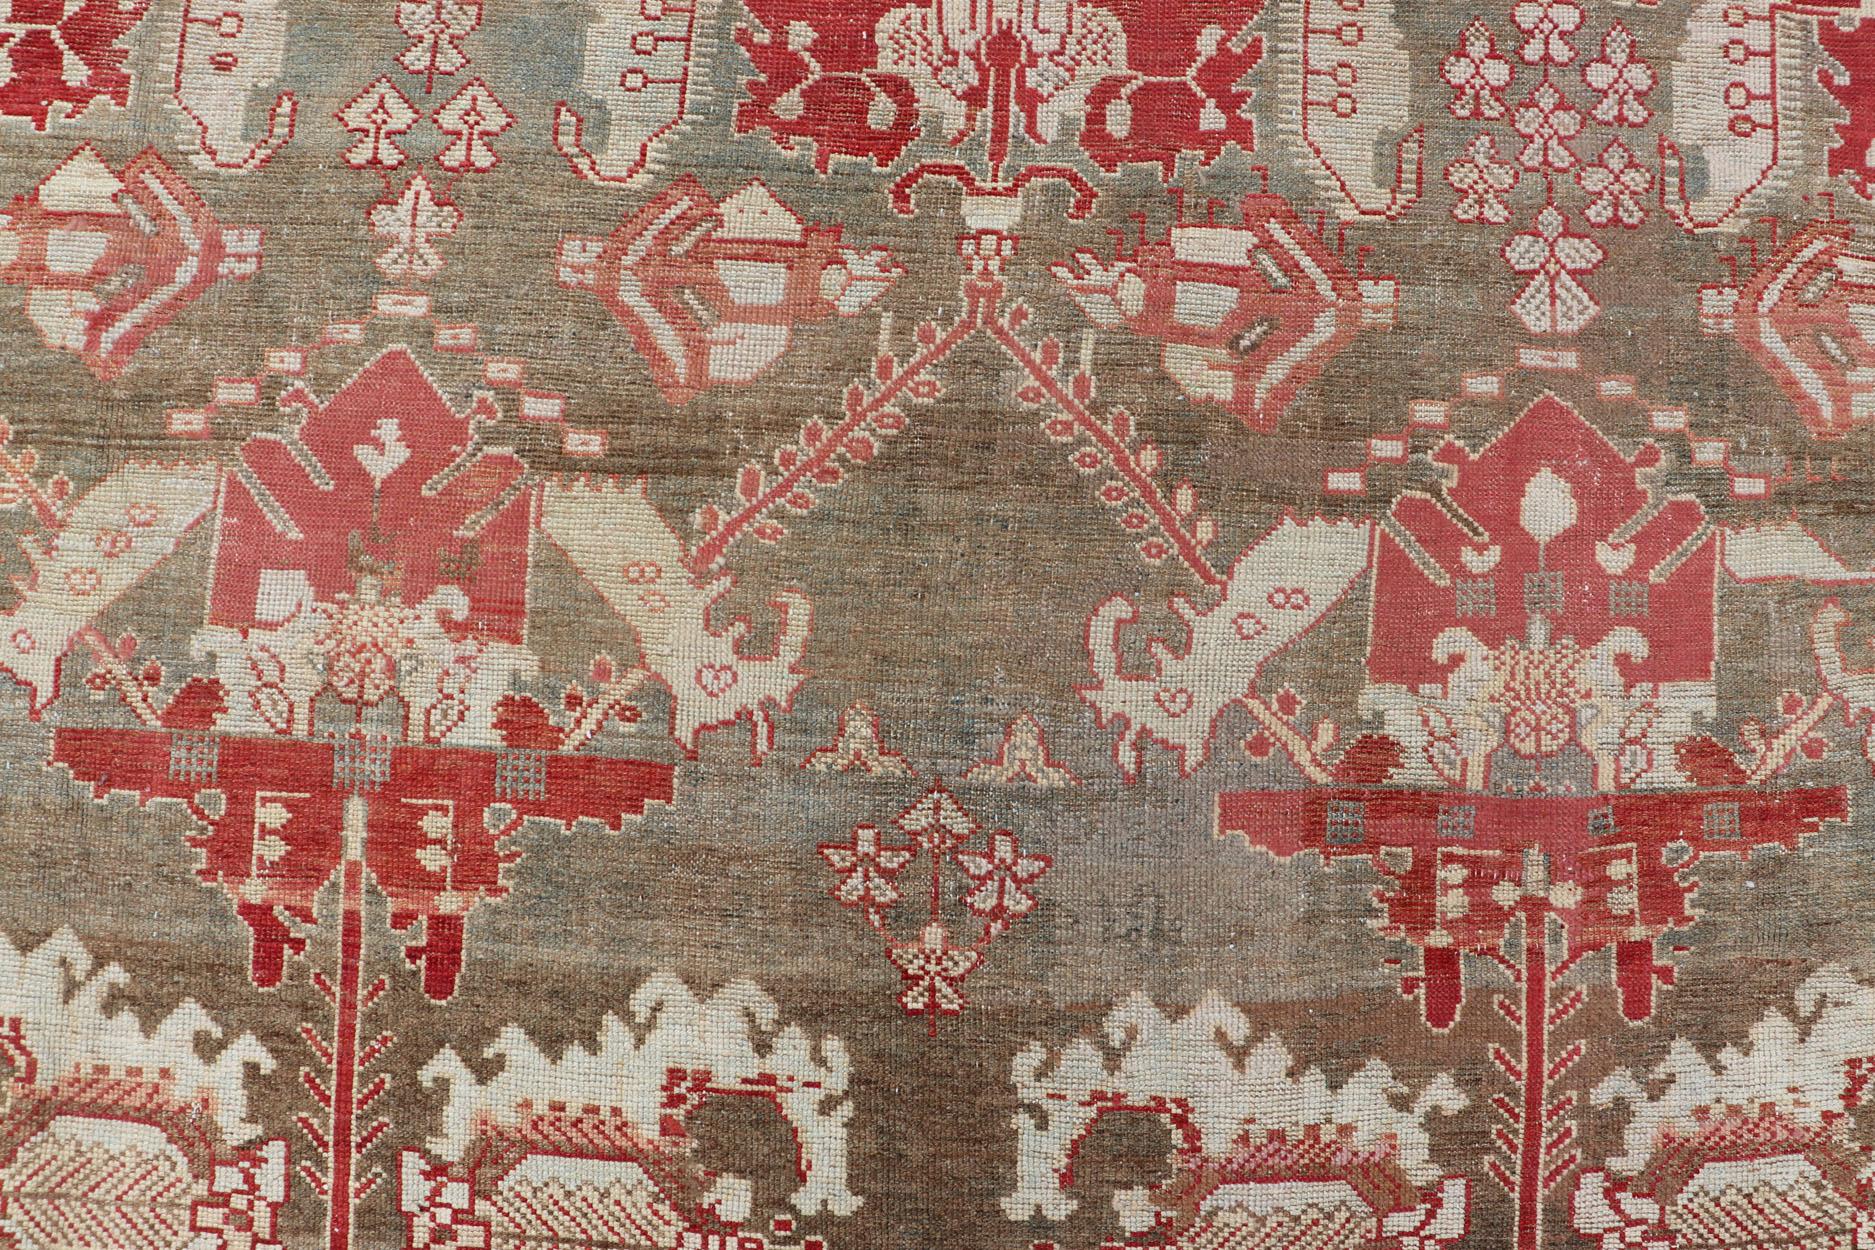 Antique Persian Large Scale Tribal Design Bakhtiari Rug in Multi Colors For Sale 6